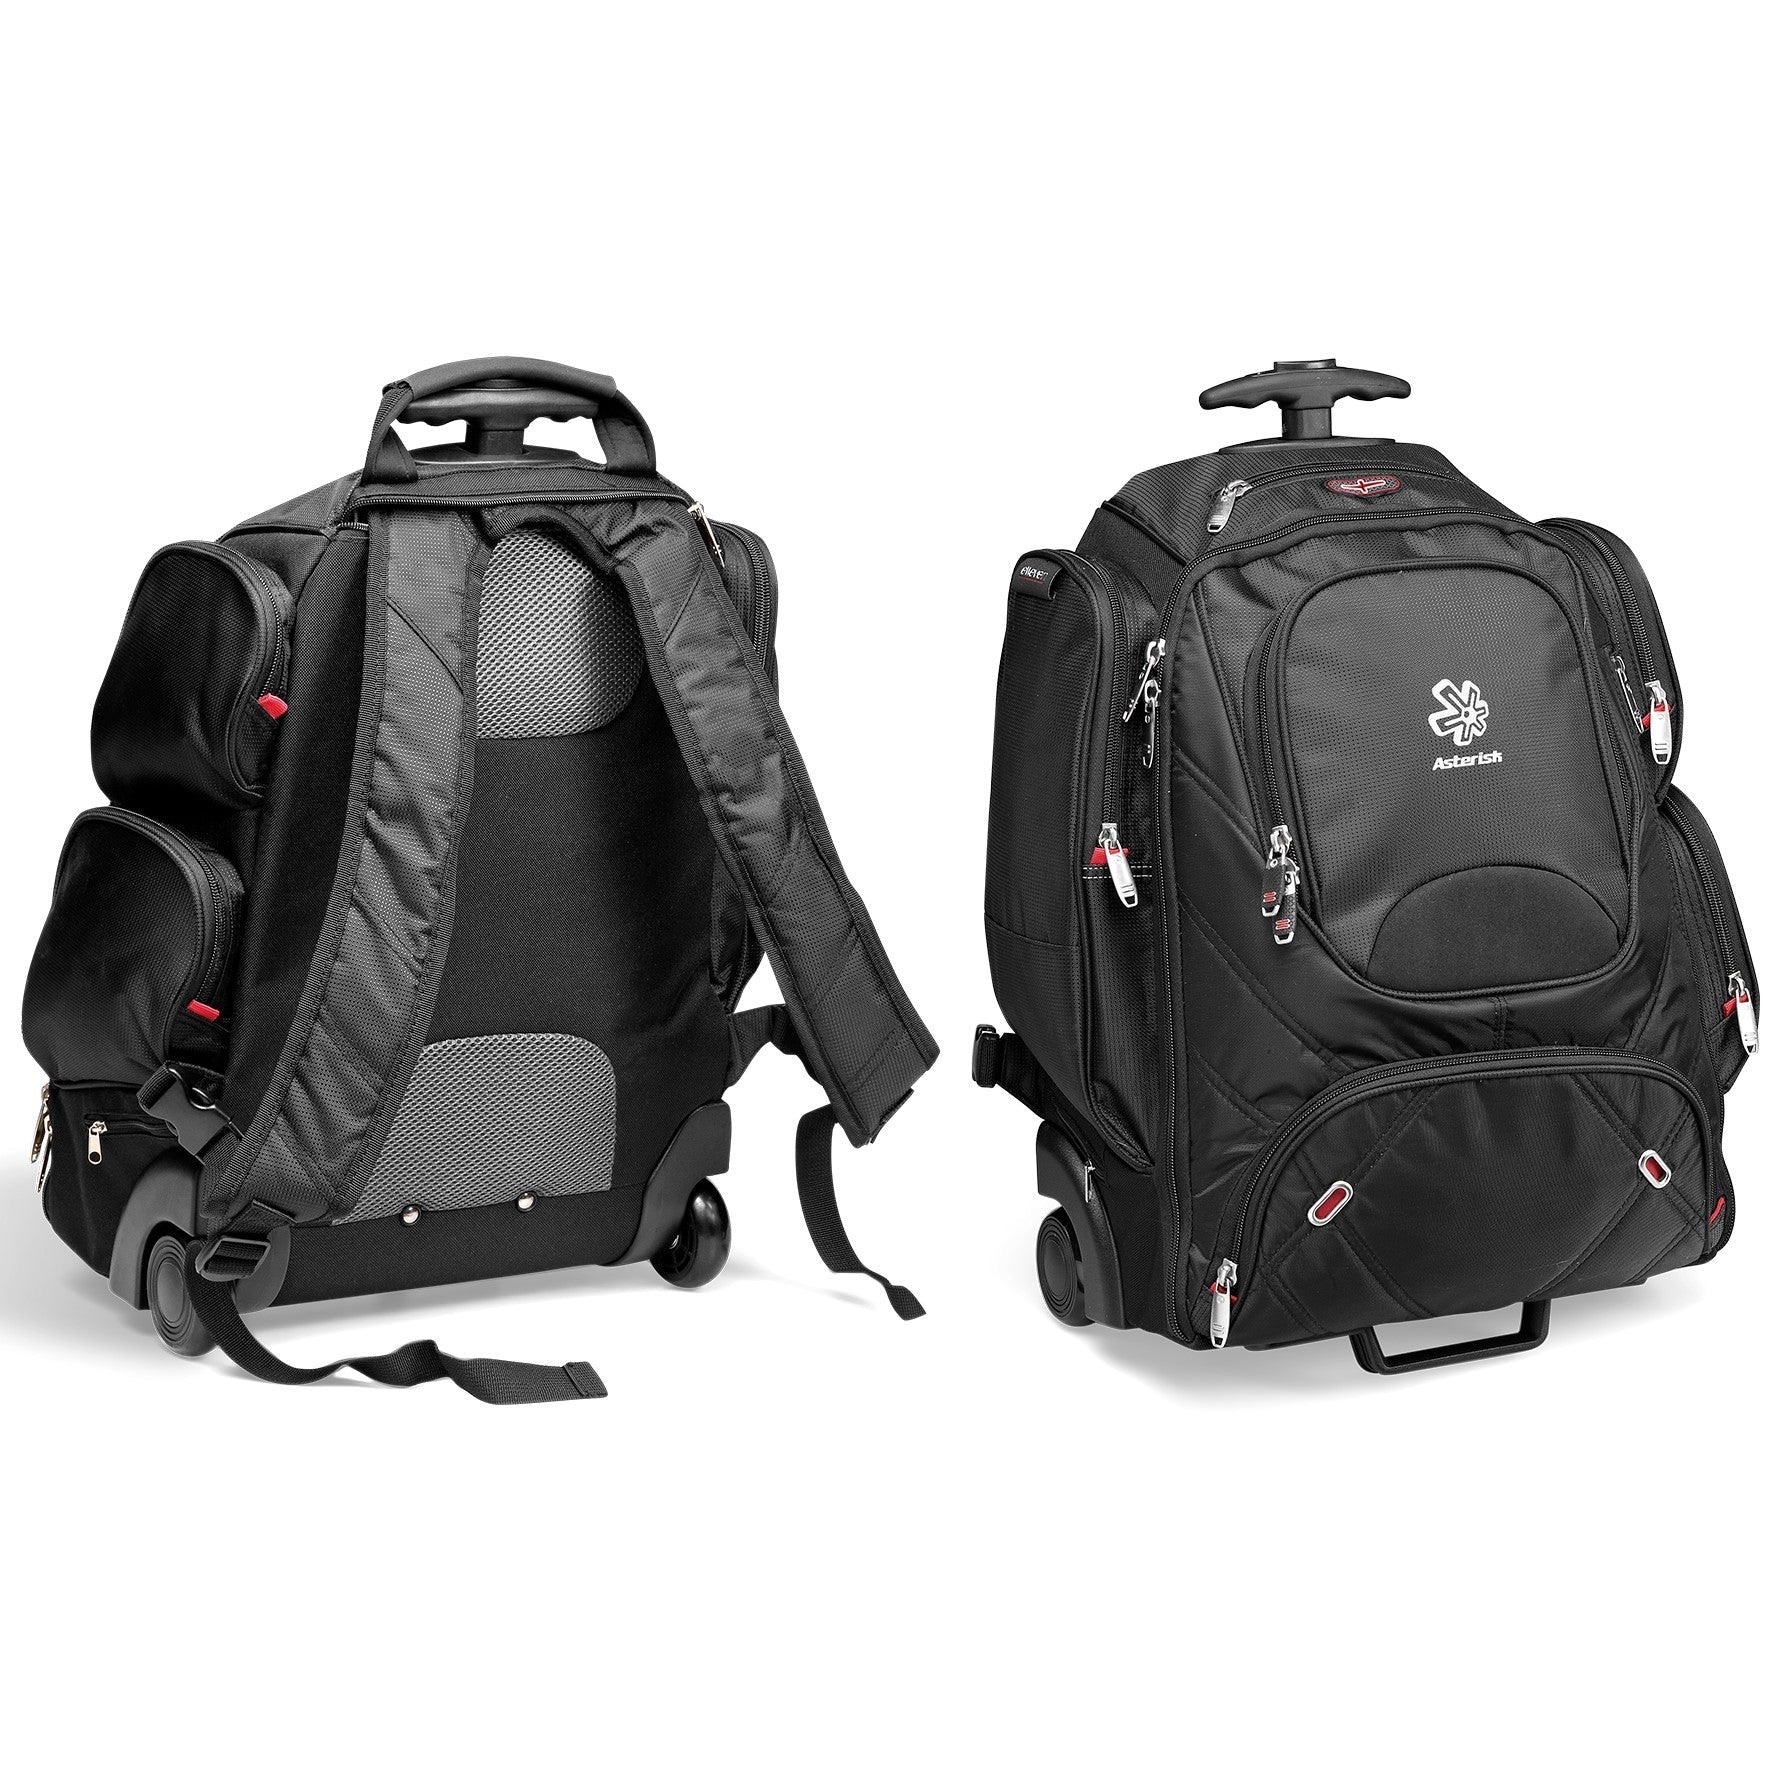 Elleven Tech Trolley Backpack-Backpacks